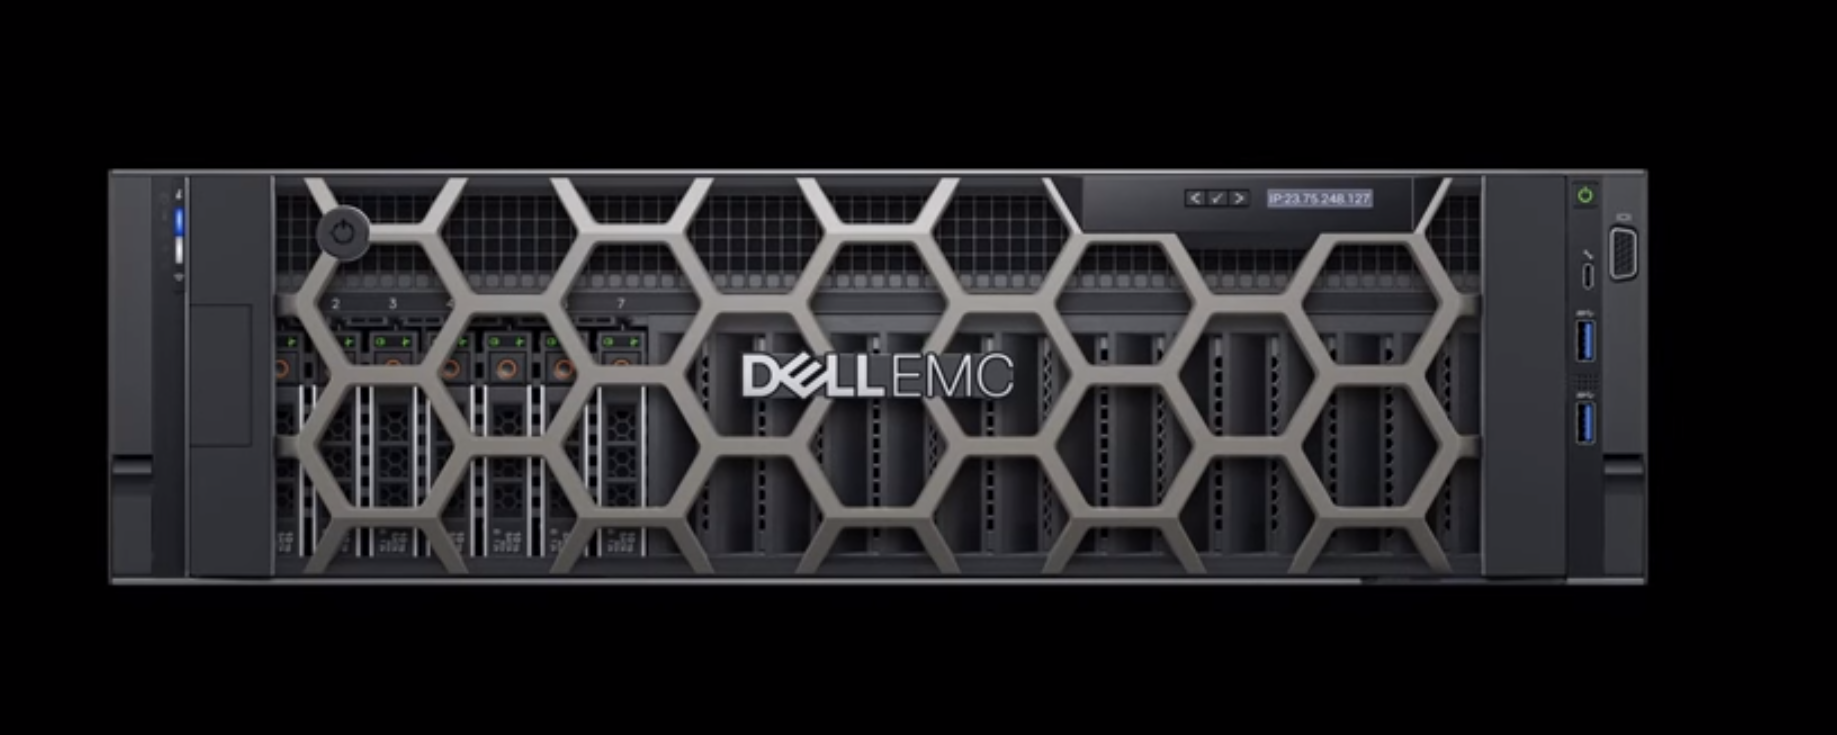 Dell EMC PowerEdge Server 14th Generation